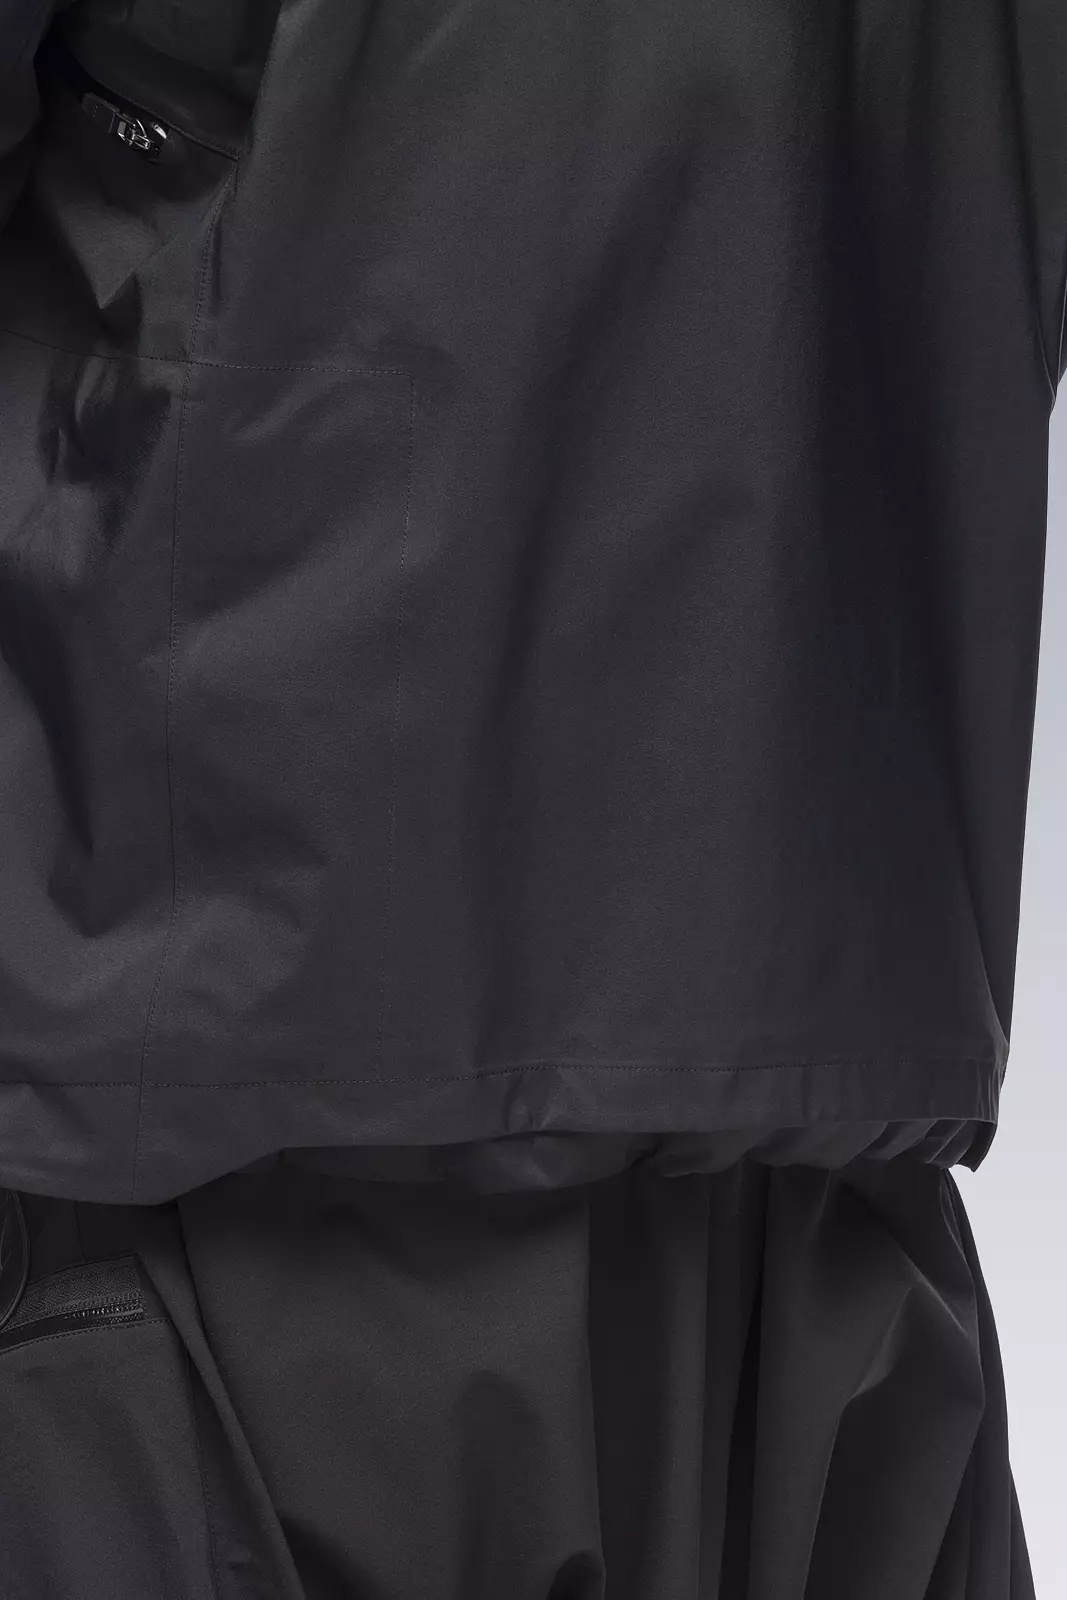 J1A-GTKR-BKS KR EX 3L Gore-Tex® Pro Interops Jacket Black with size 5 WR zippers in gloss black - 33